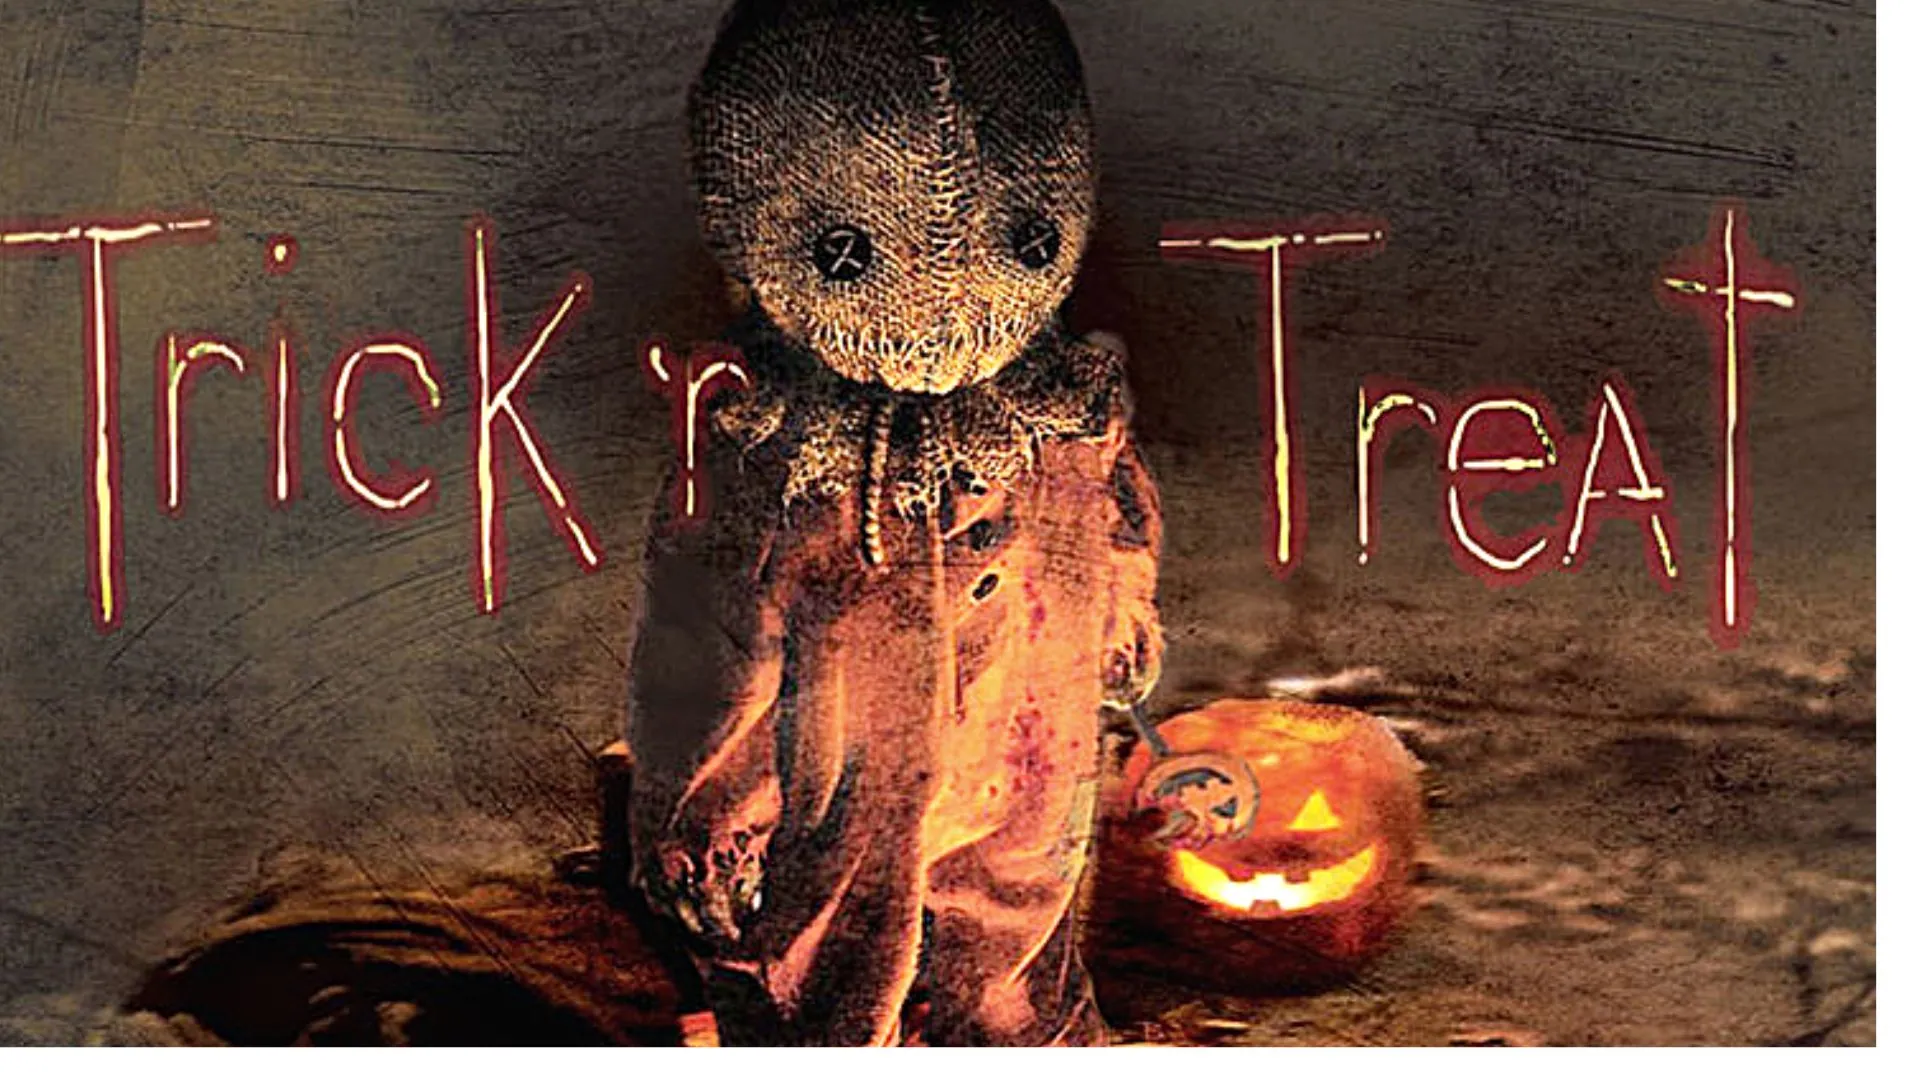 Trick 'r Treat: Cult-classic Halloween Horror Favourite